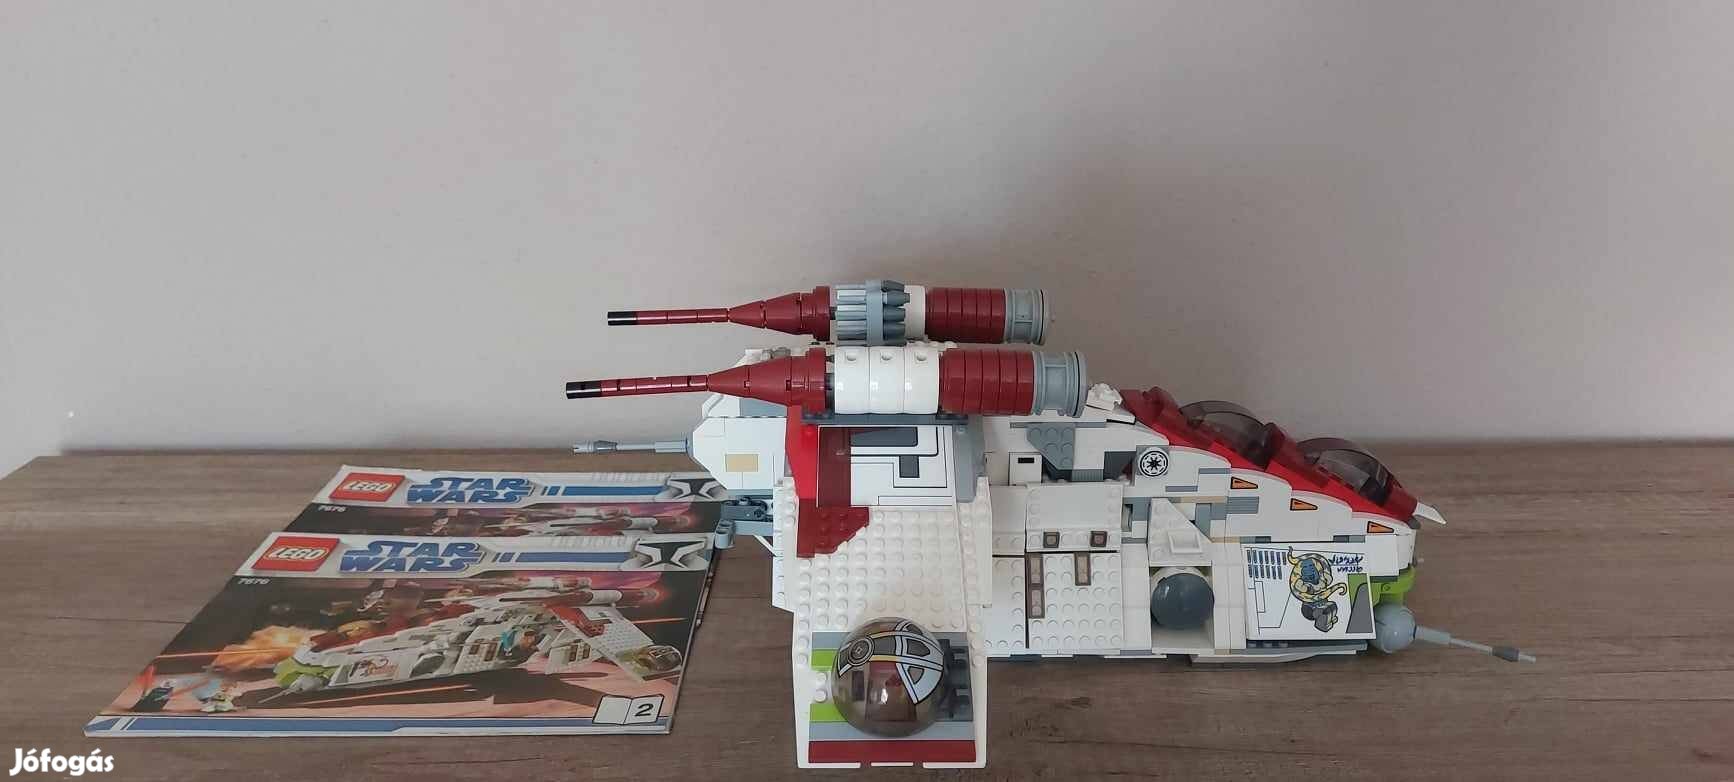 Eladó 7676, Republic Attack Gunship, LEGO Star Wars